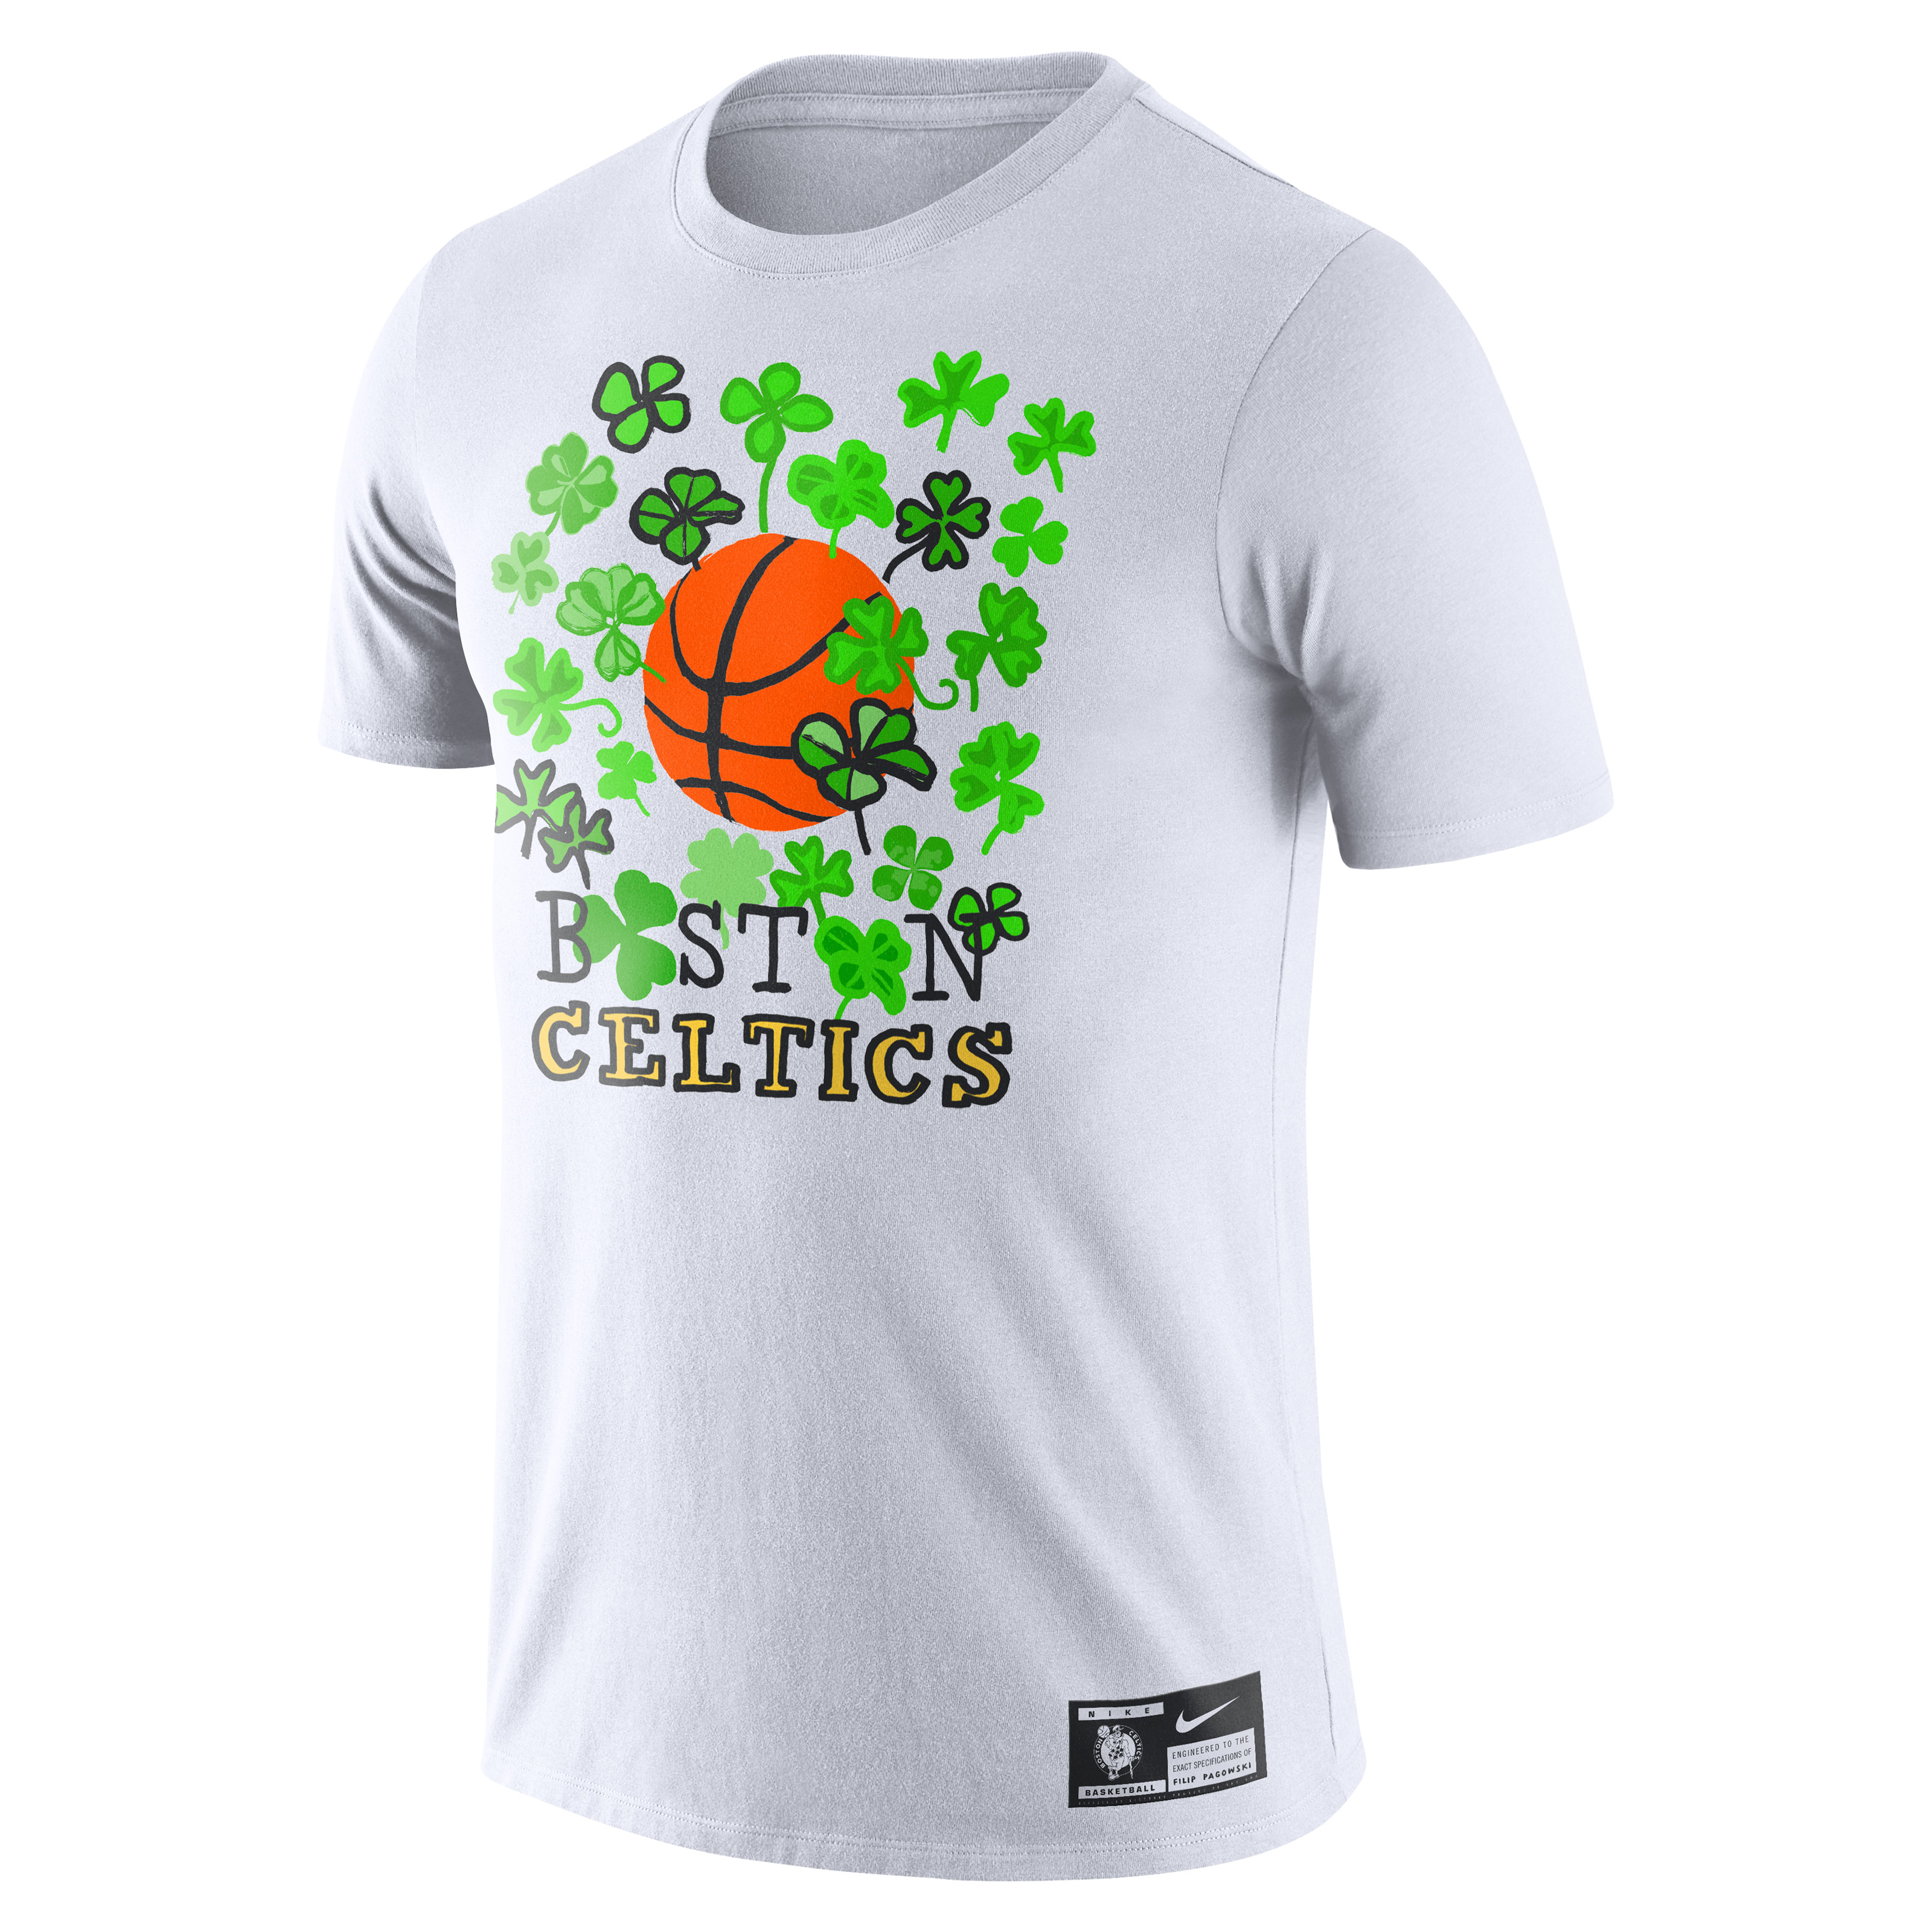 Filip Pagowski Nike T shirt &#x27;Boston Celtics&#x27;